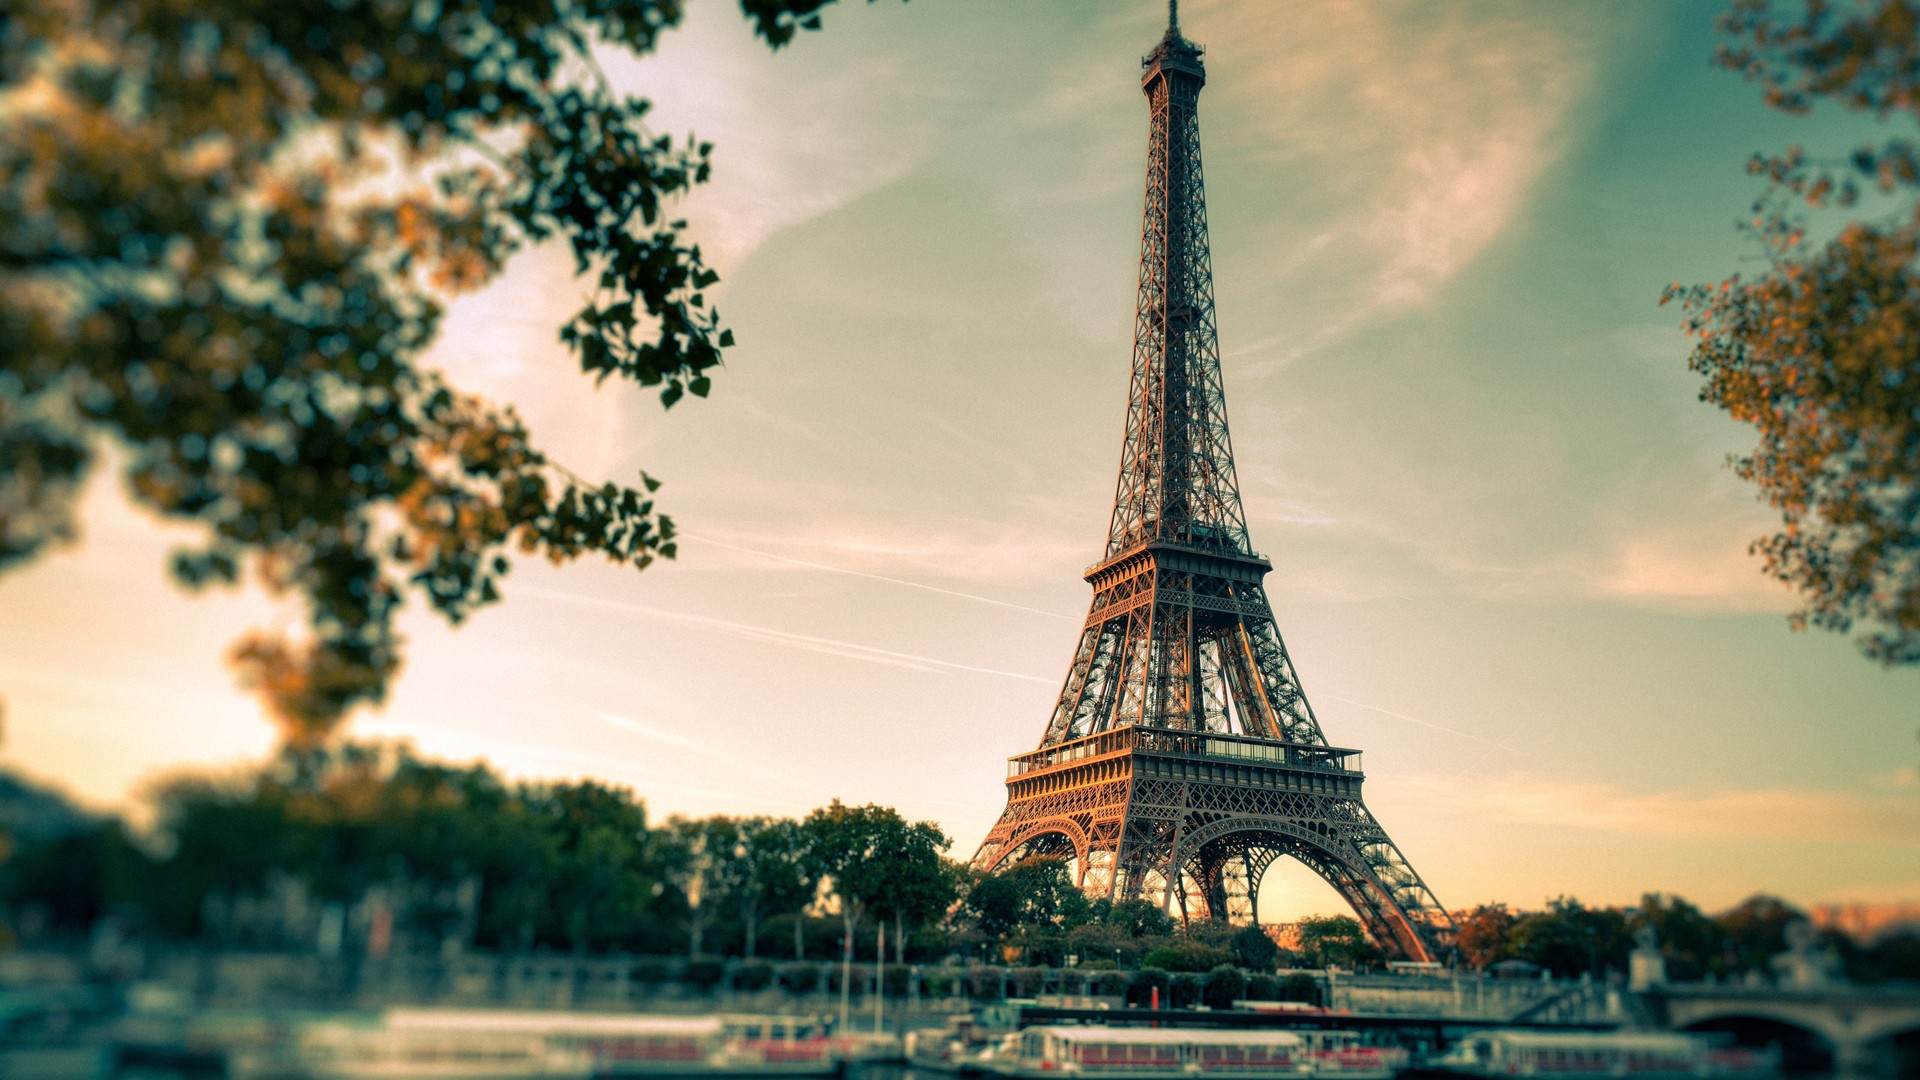 General 1920x1080 Eiffel Tower clouds Paris France cityscape landmark Europe